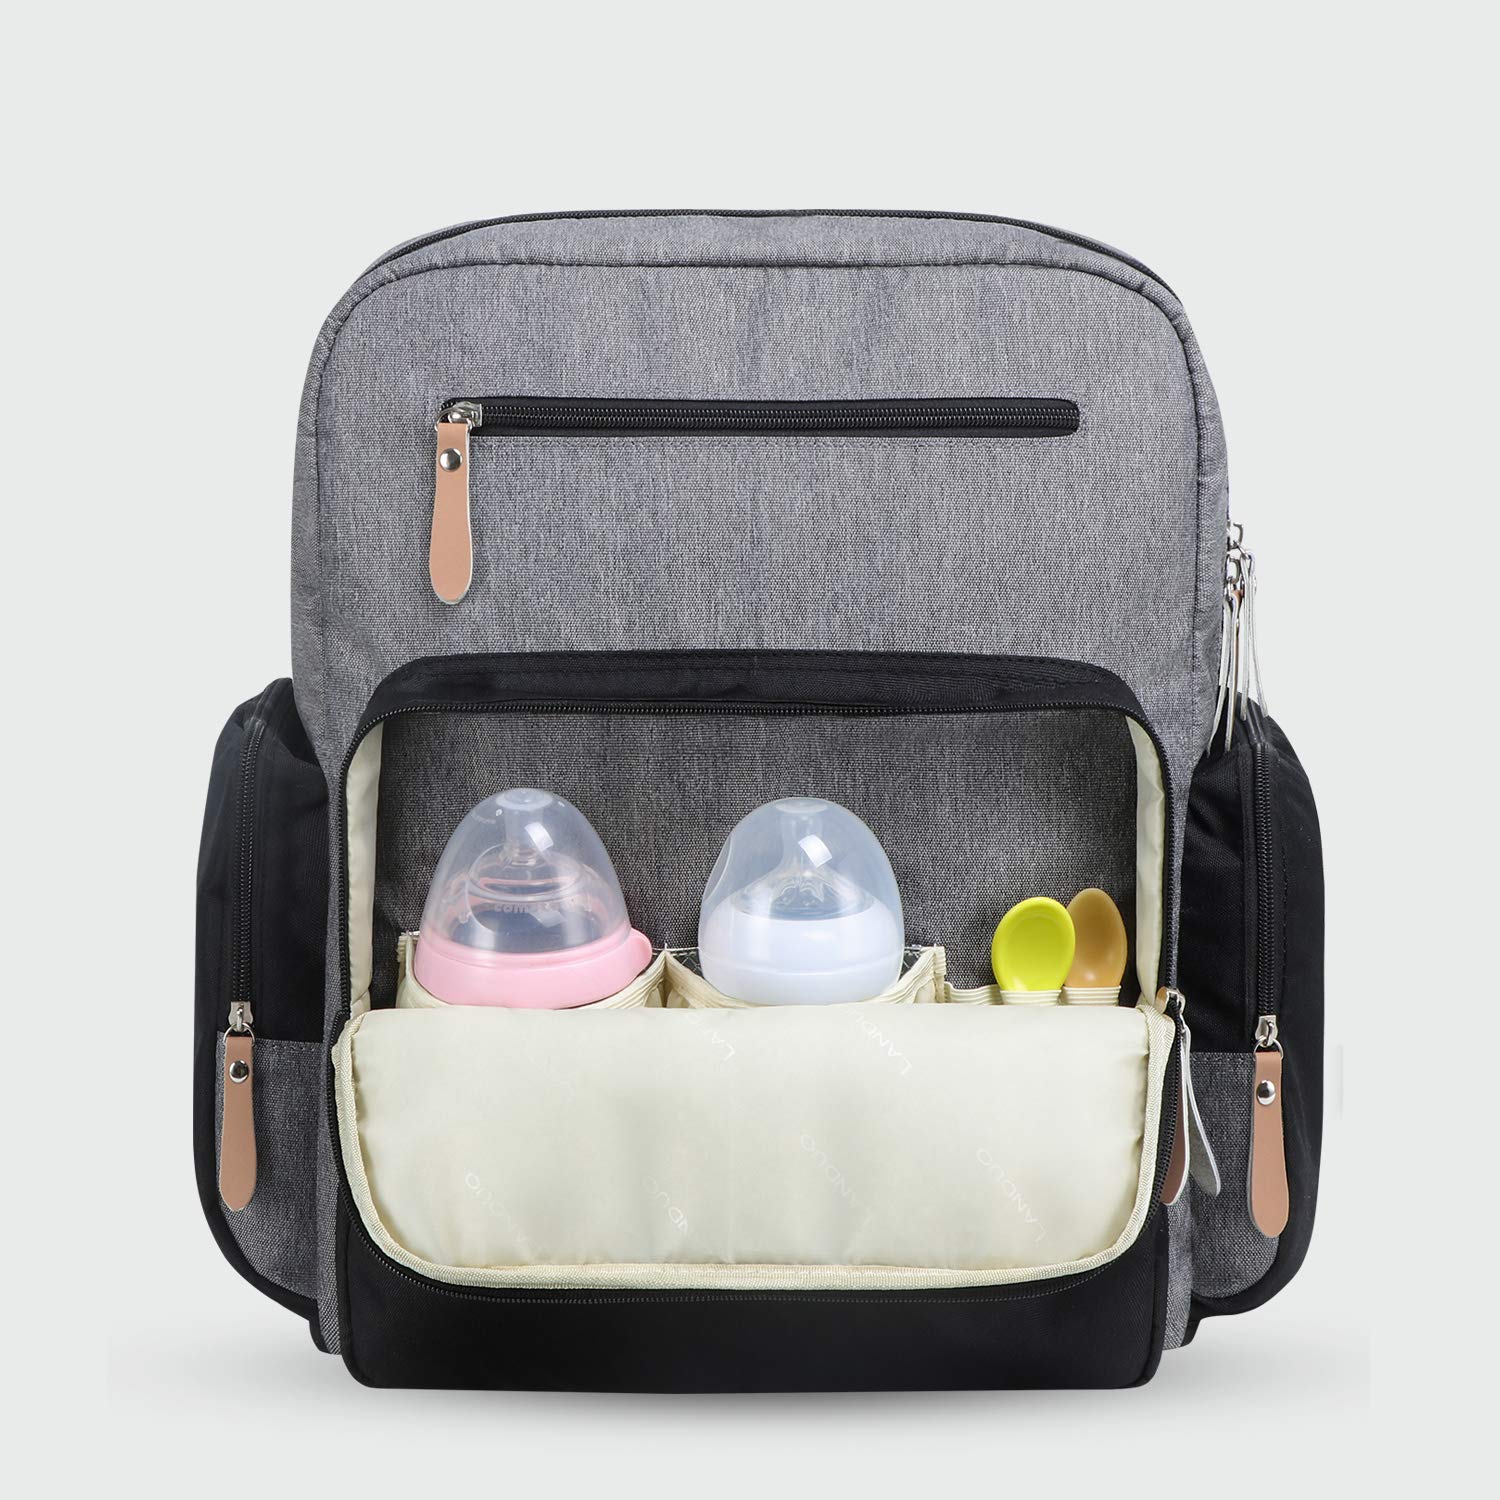 CFUN LANDUO Mummy Diaper Bag Backpack Durable Maternity Baby Nappy Casual Shoulder Bags Travel Hiking Outdoor Pack